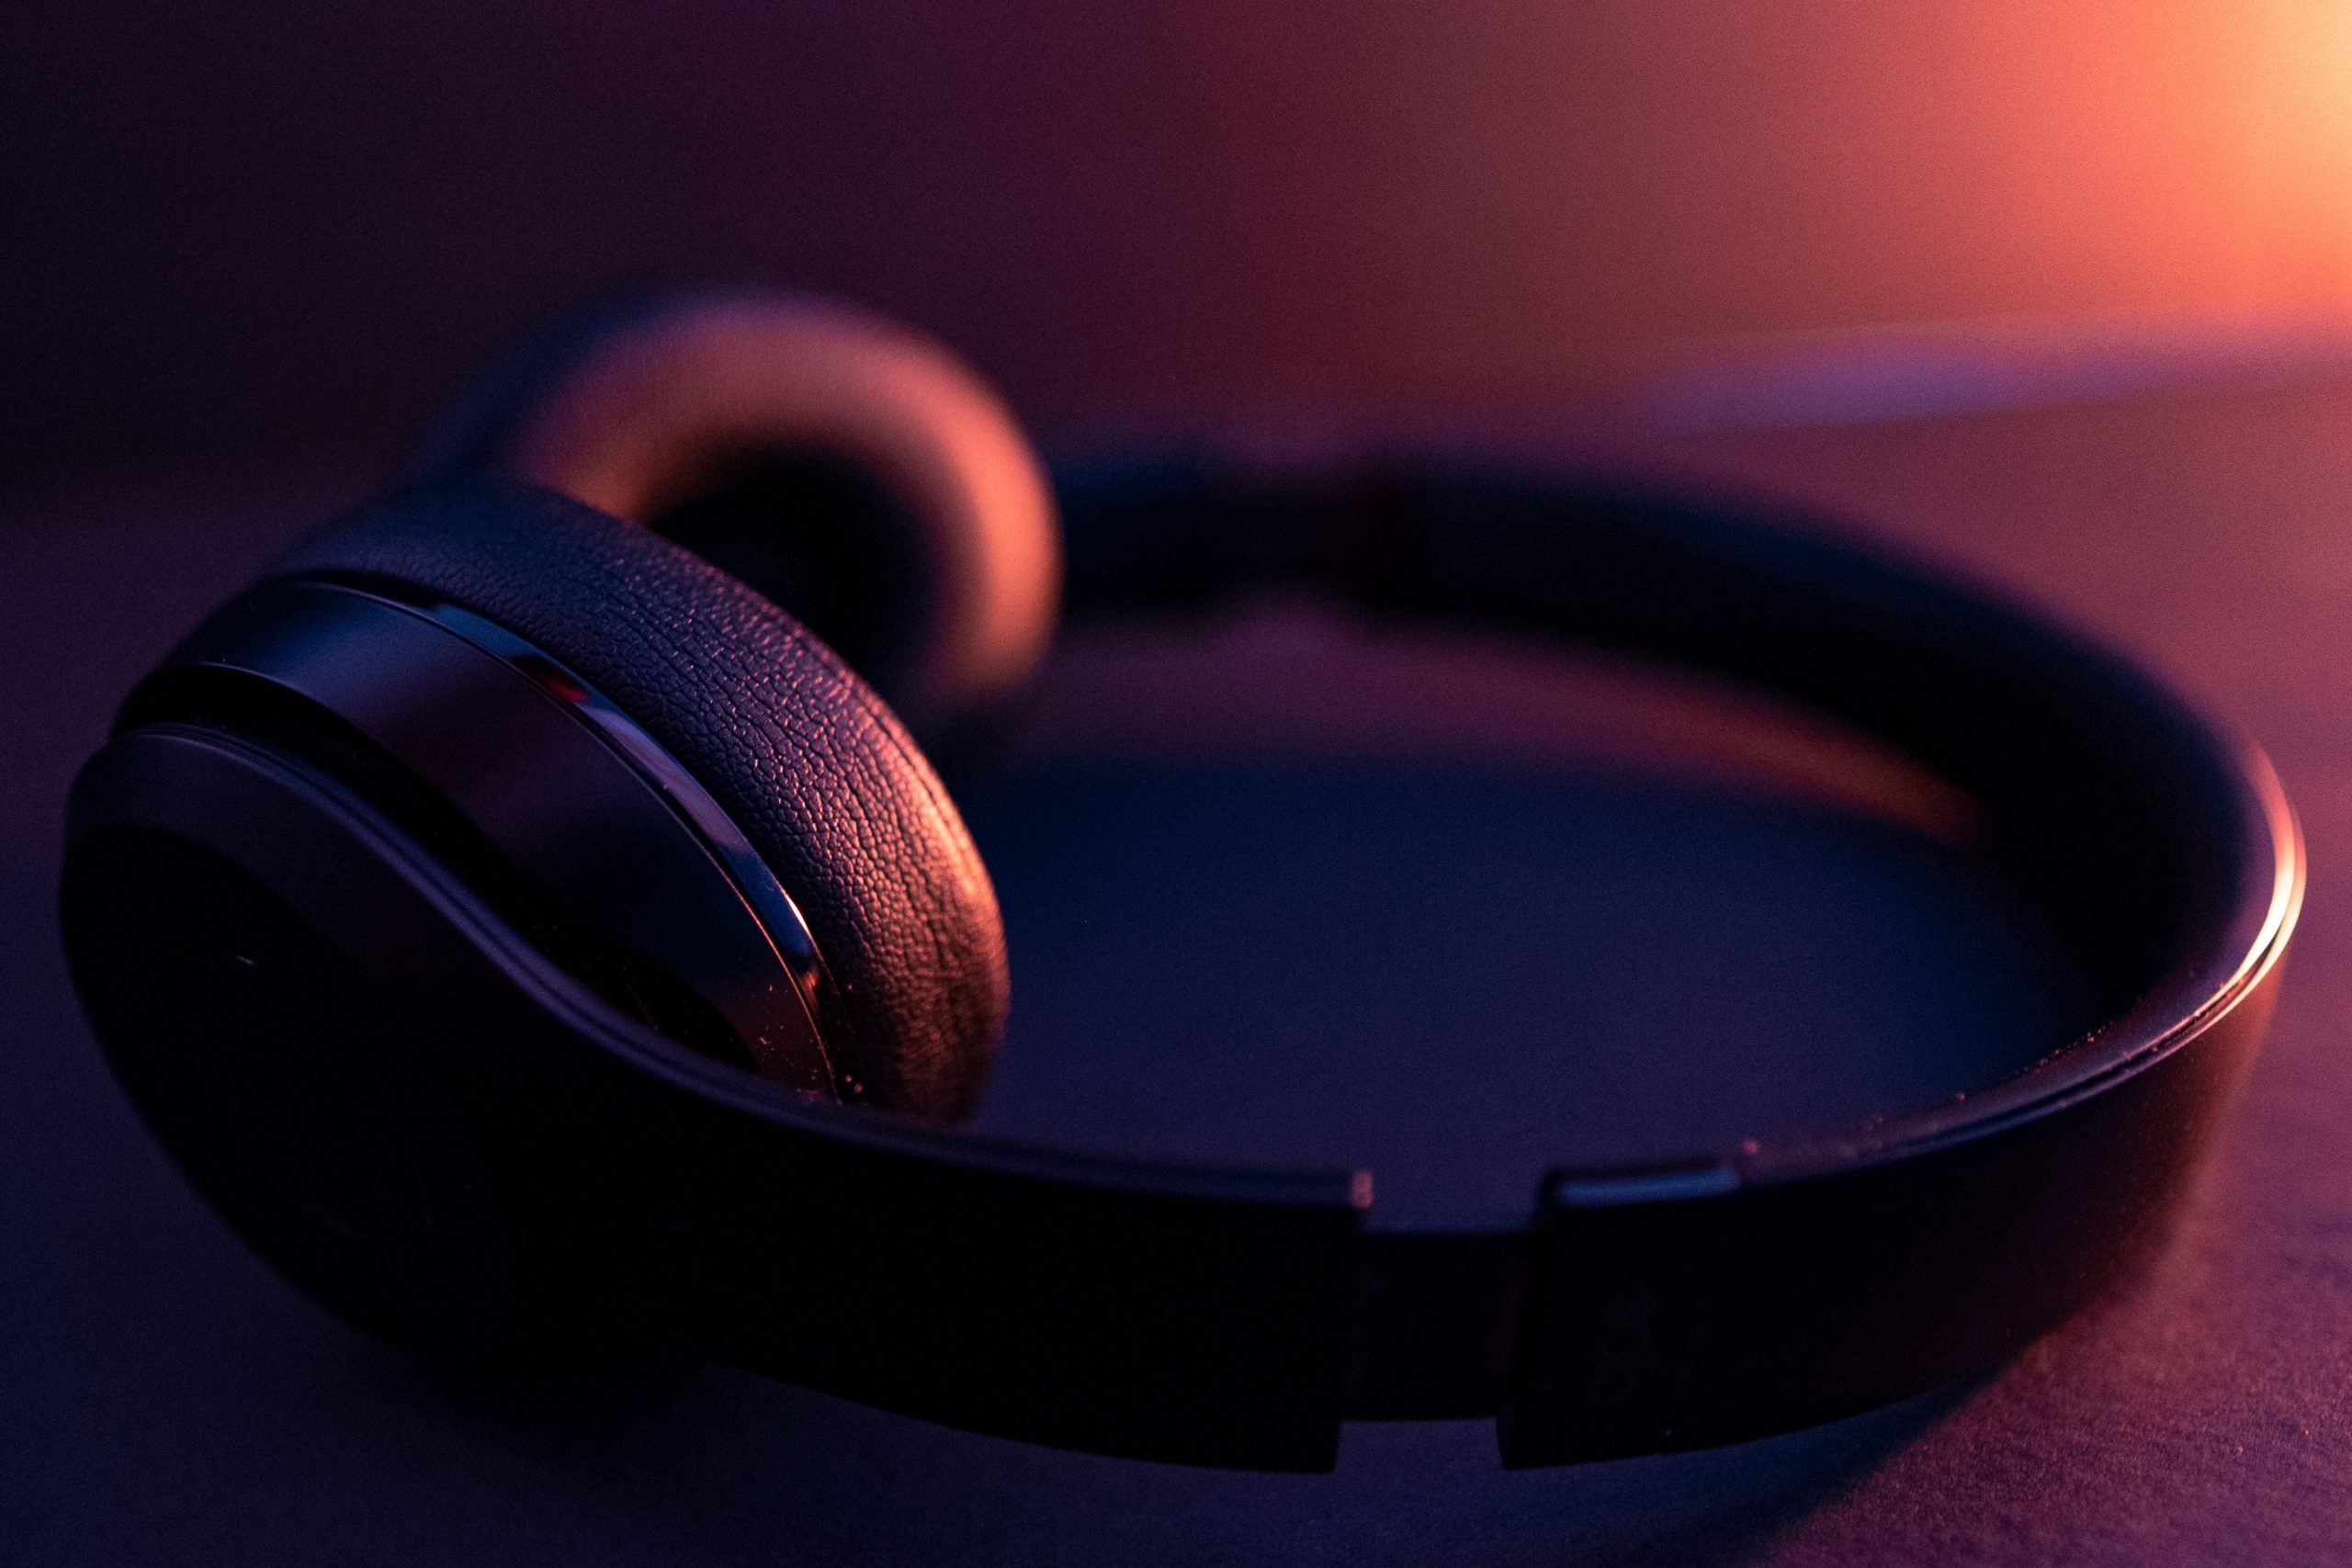 Headphones, photo by Ryan Bruce via Burst.